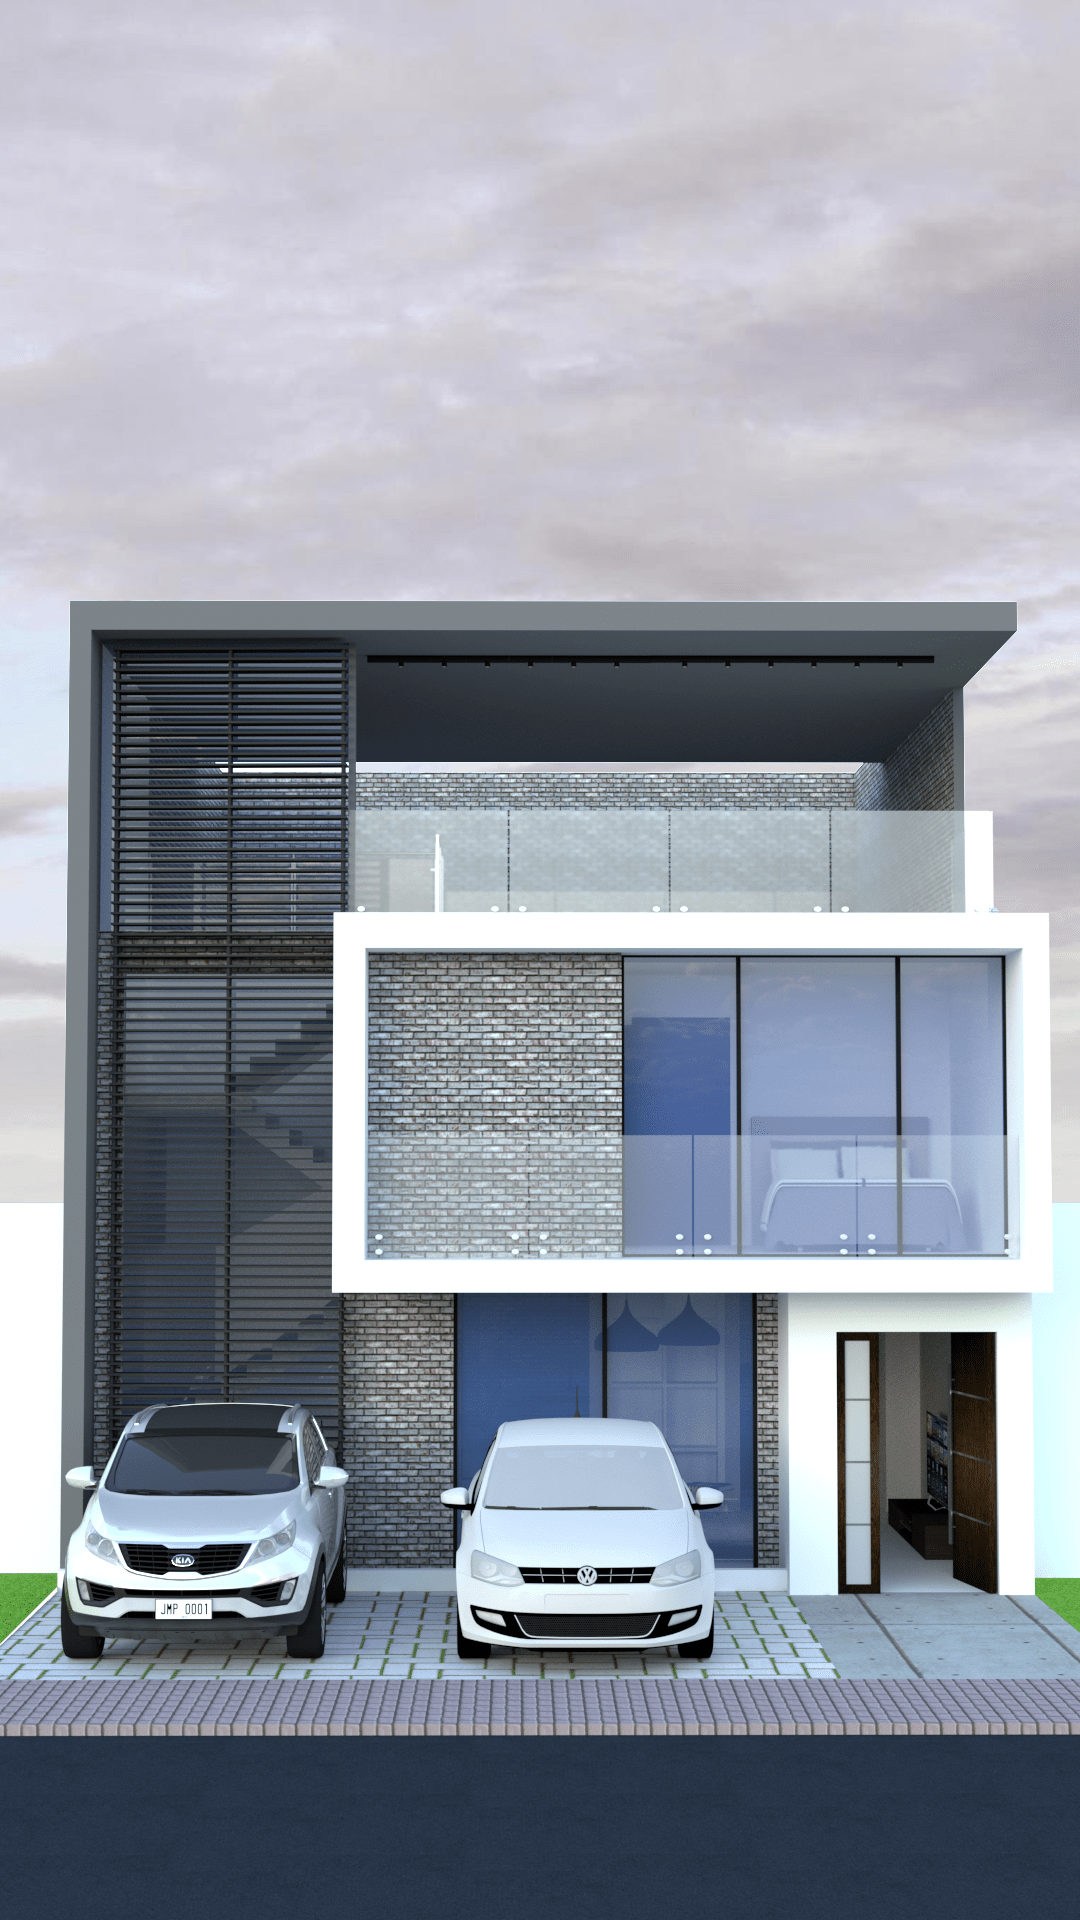 arquitectura arquitetura de interiores architecture architectural design Render 3D modern vray SketchUP lumion